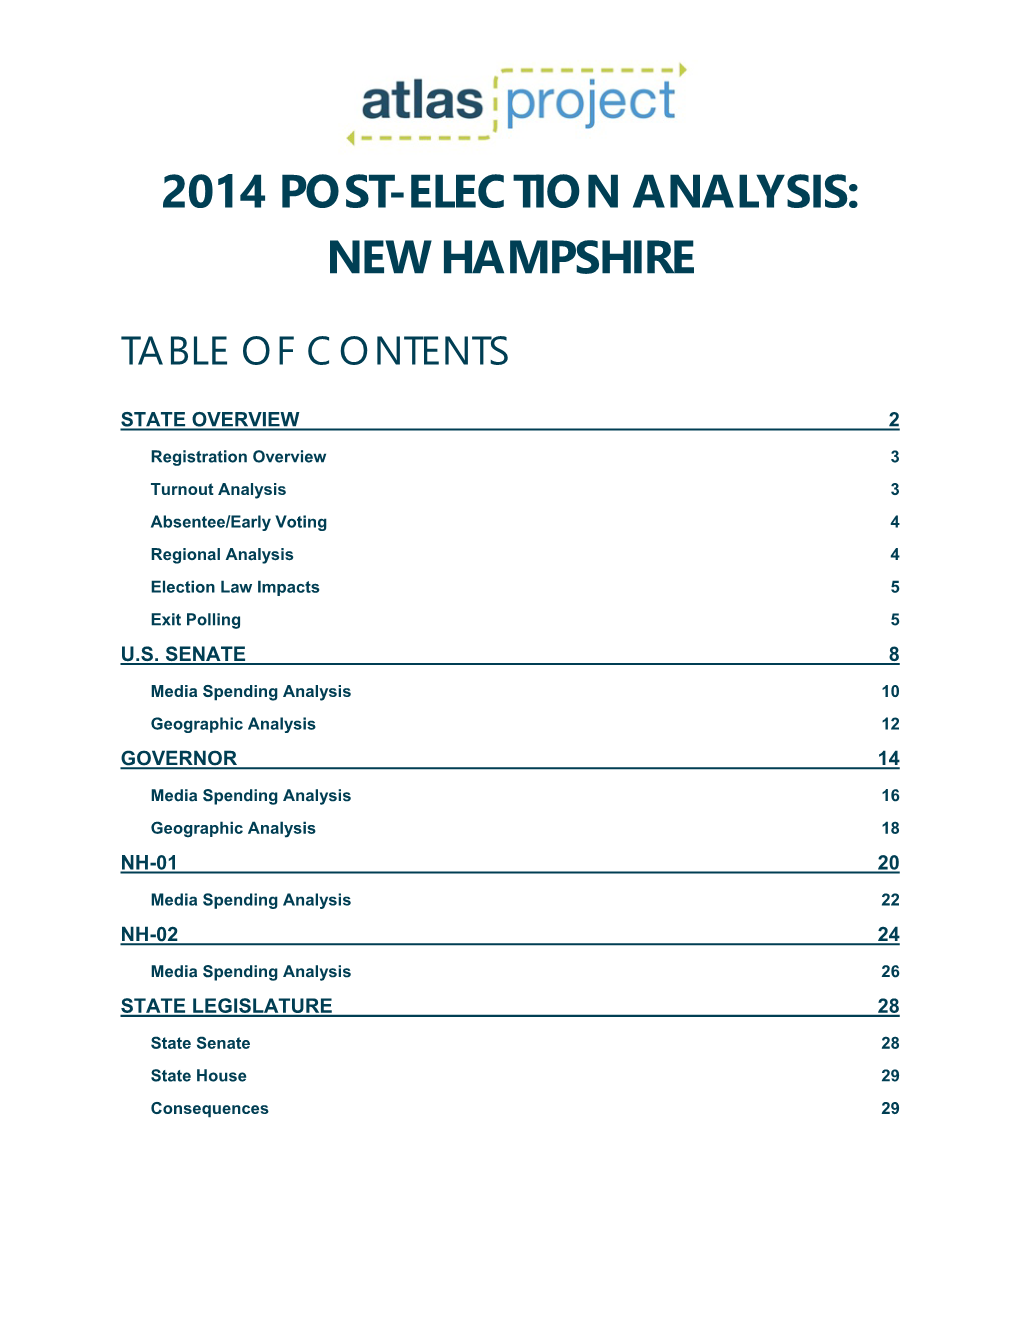 2014 Post-Election Analysis: New Hampshire